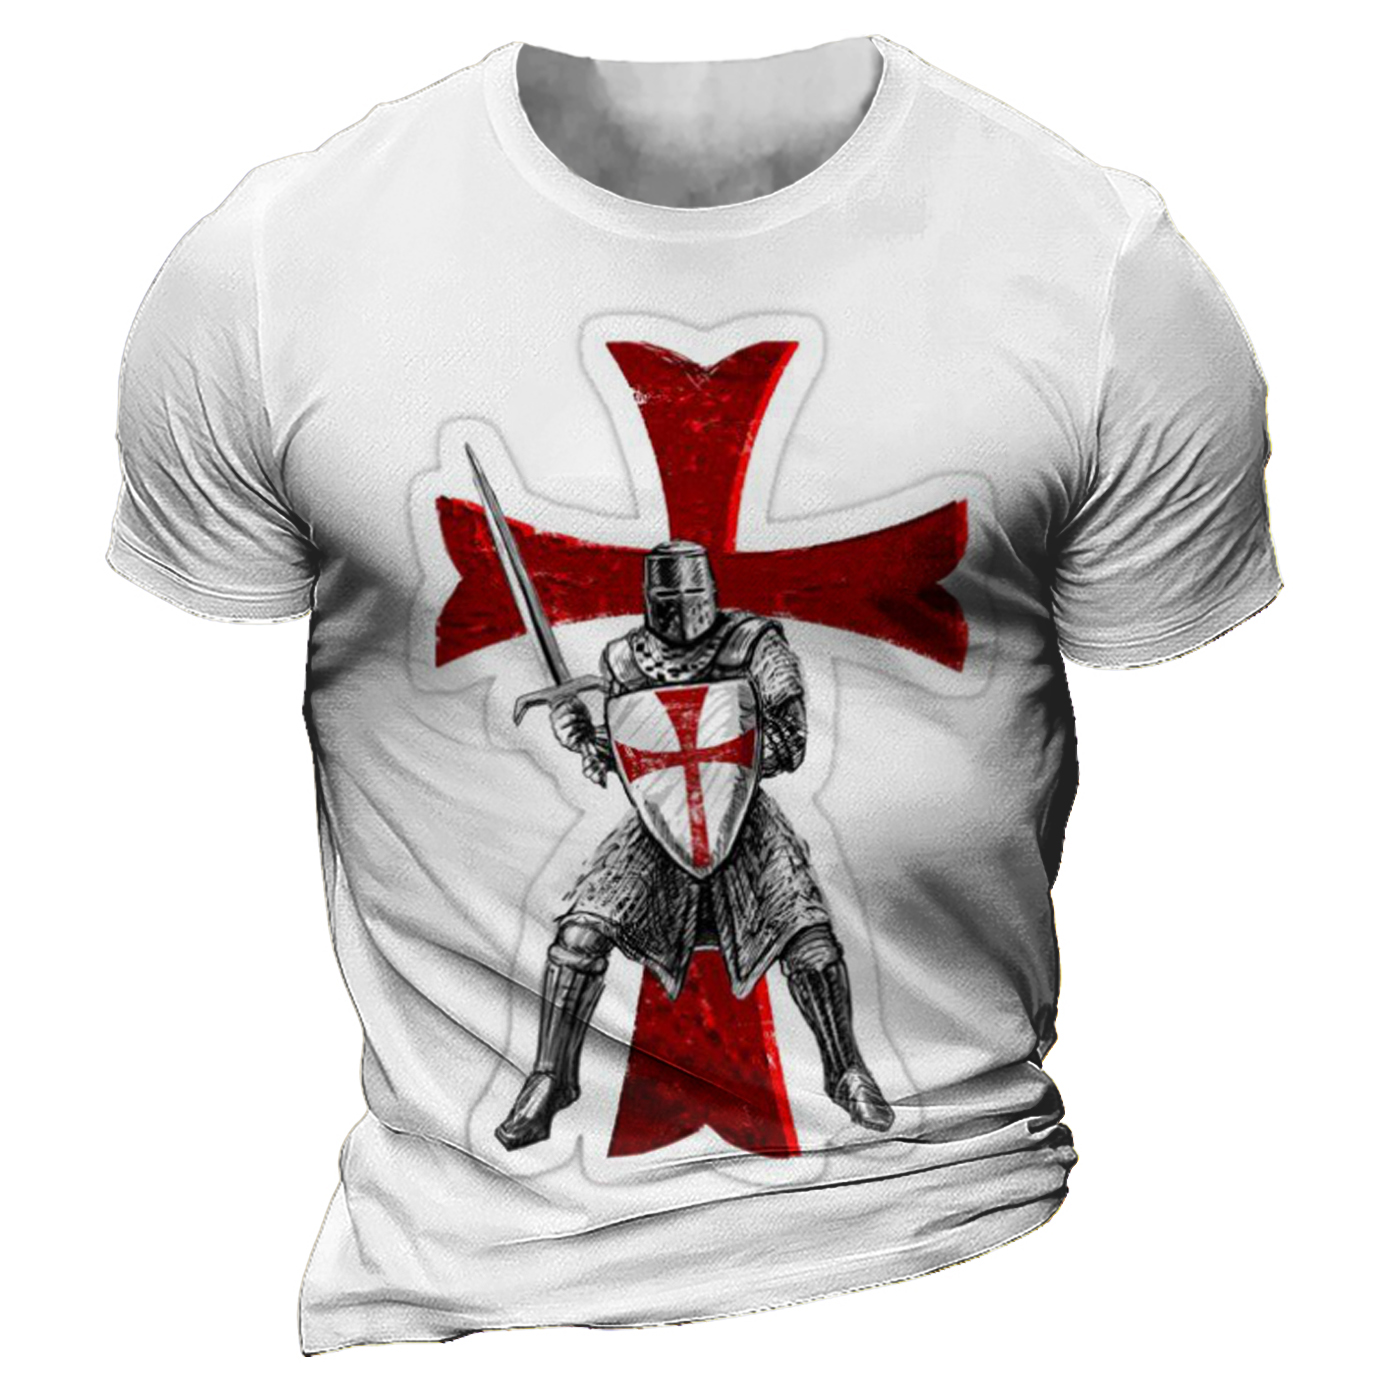 Men's Cross Warrior Print Chic Round Neck Short Sleeve T-shirt